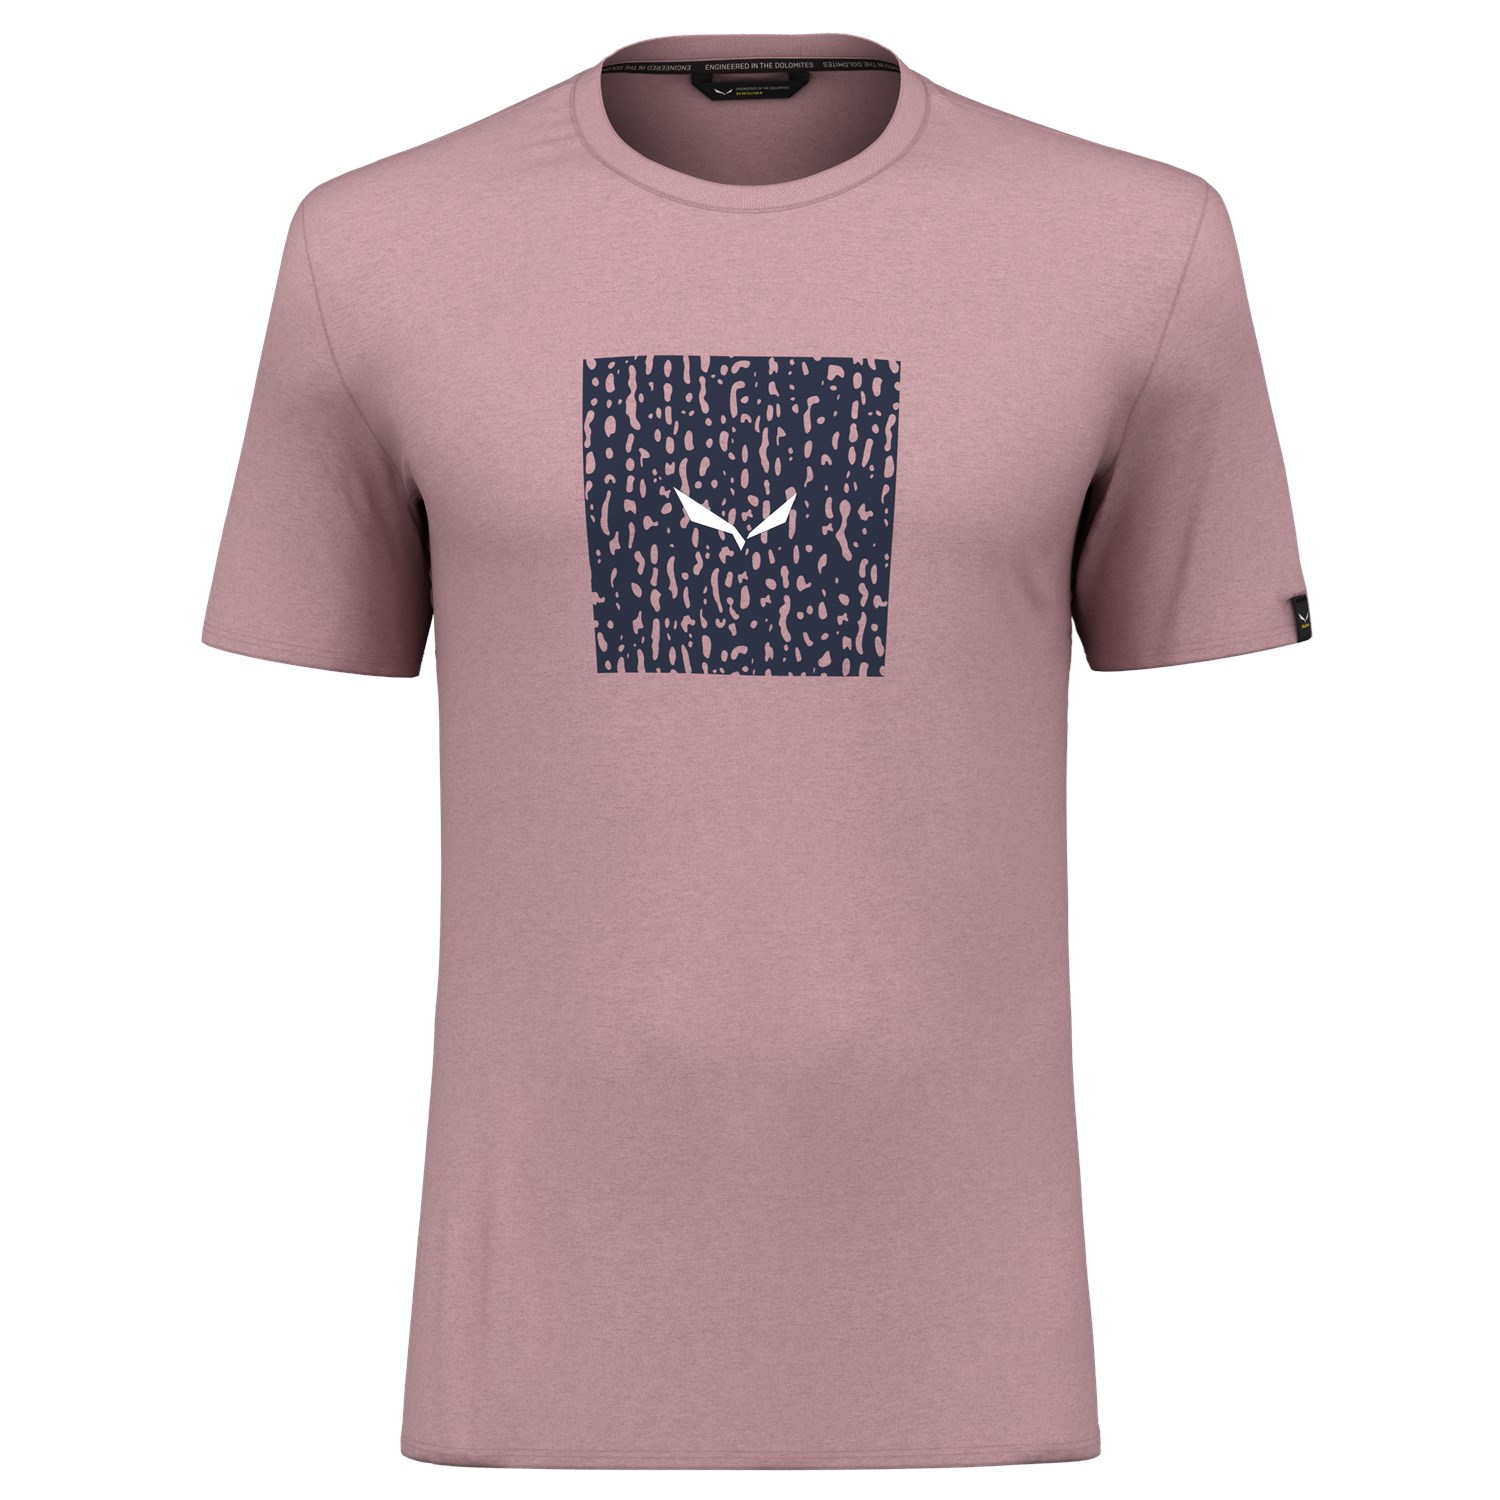 Hugo Boss Men's Tee 9 Pink Graphic Print Crewneck T-Shirt